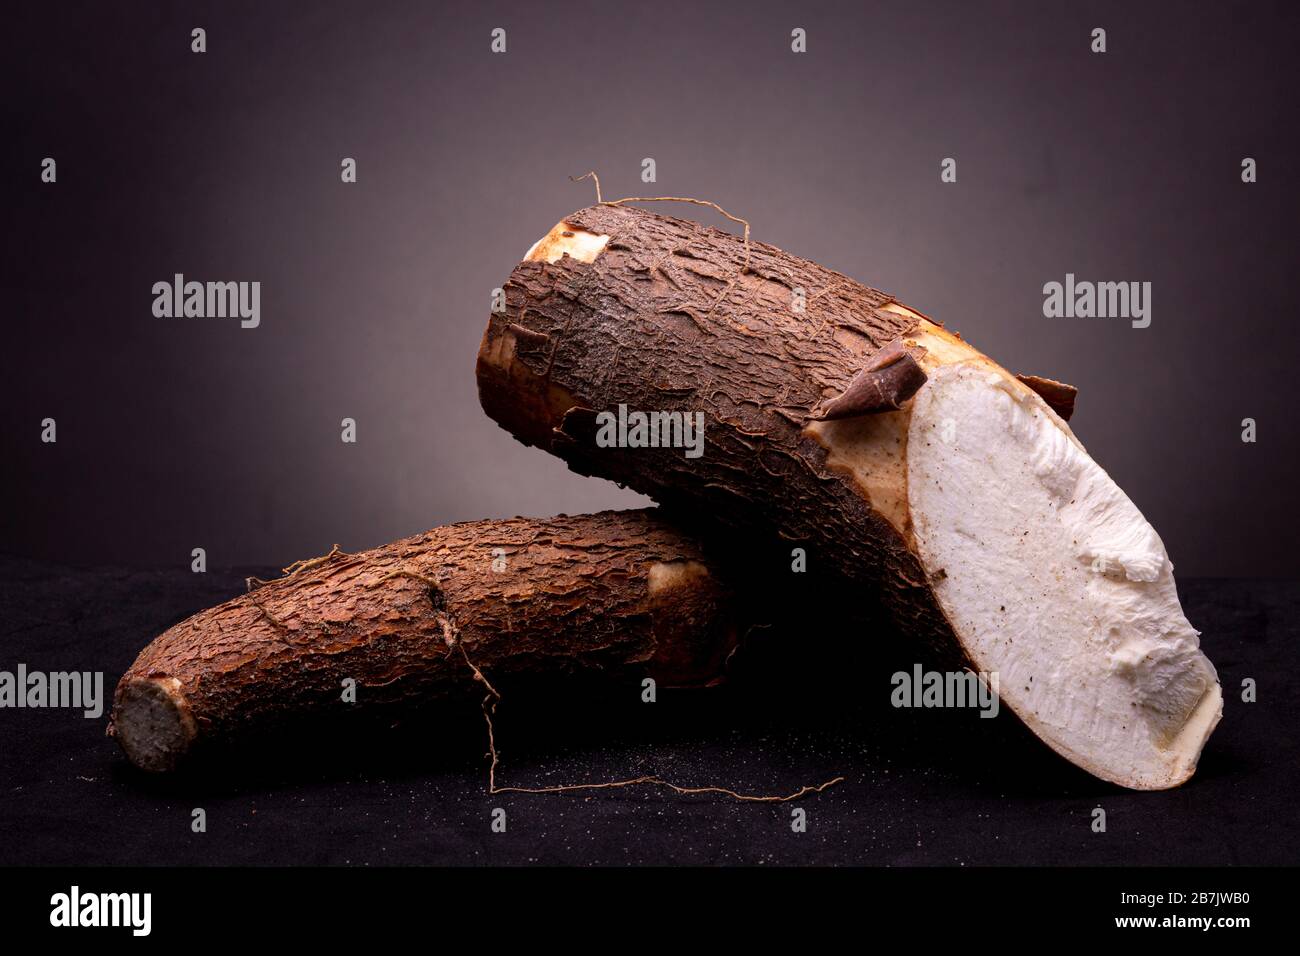 Two edible unprepared Cassava roots with bark still in place. Still life studio shot shrub against a dark grey background Stock Photo